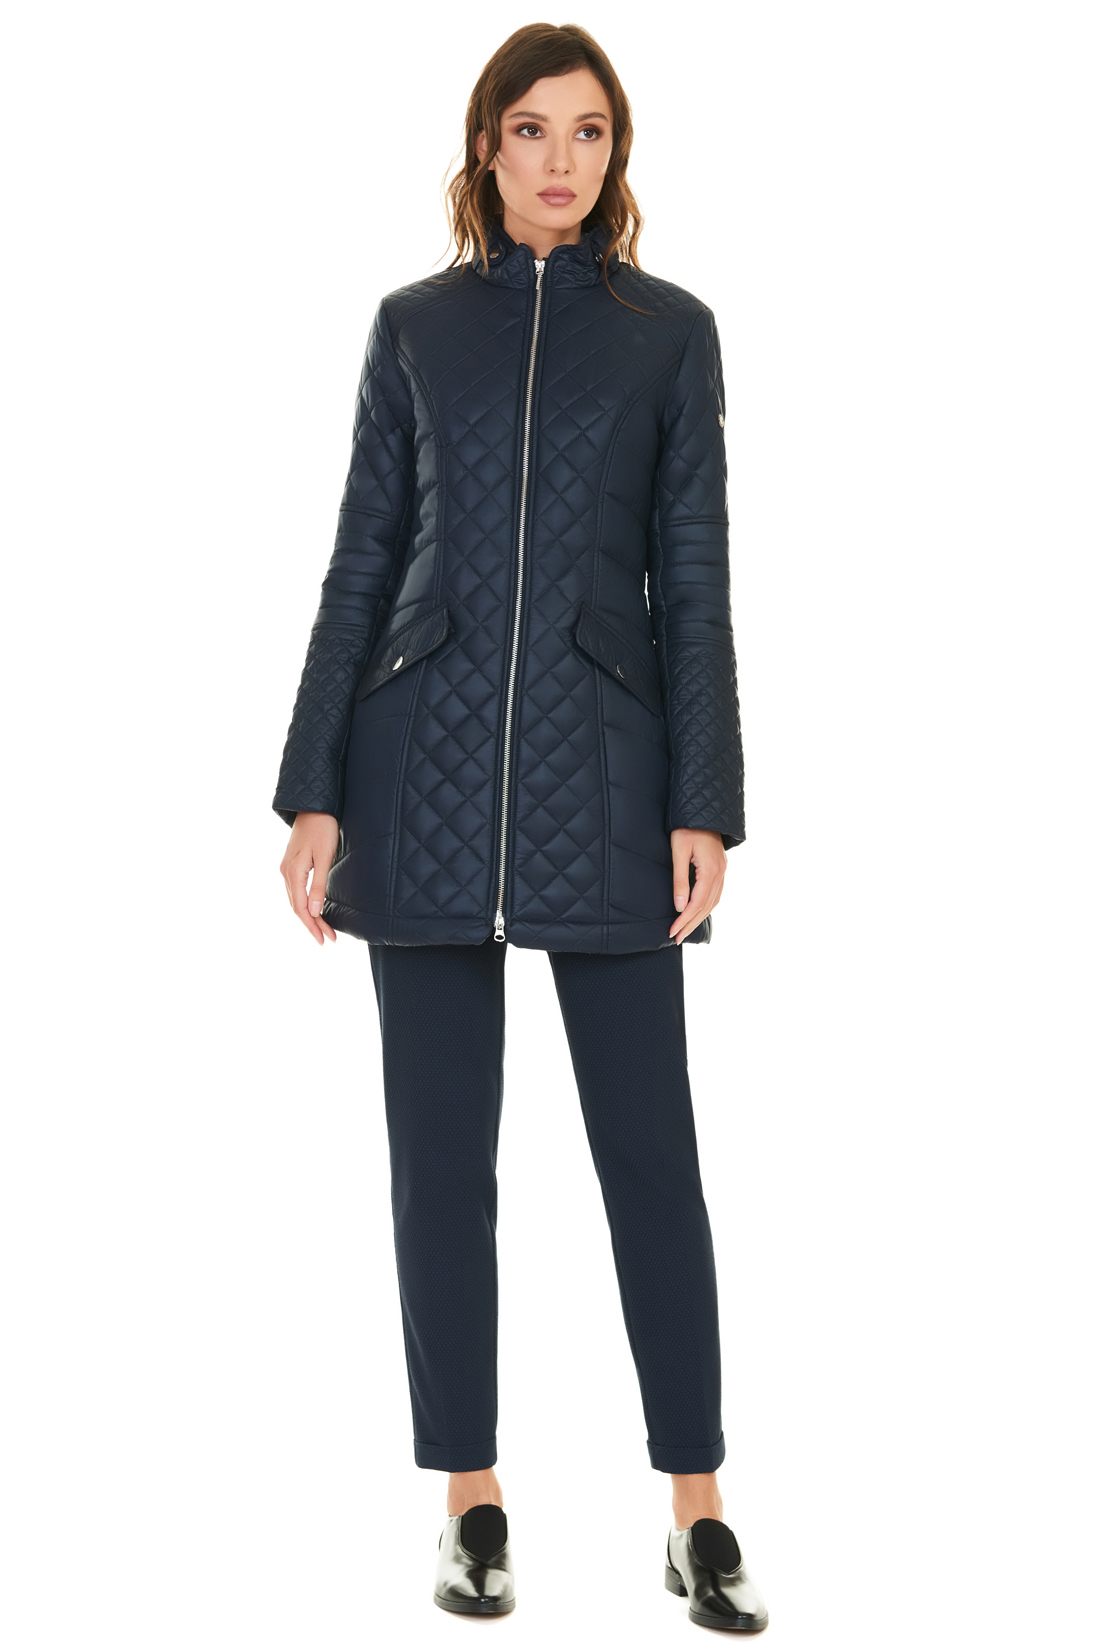 Удлинённая стёганая куртка (арт. baon B037535), размер XL, цвет синий Удлинённая стёганая куртка (арт. baon B037535) - фото 5